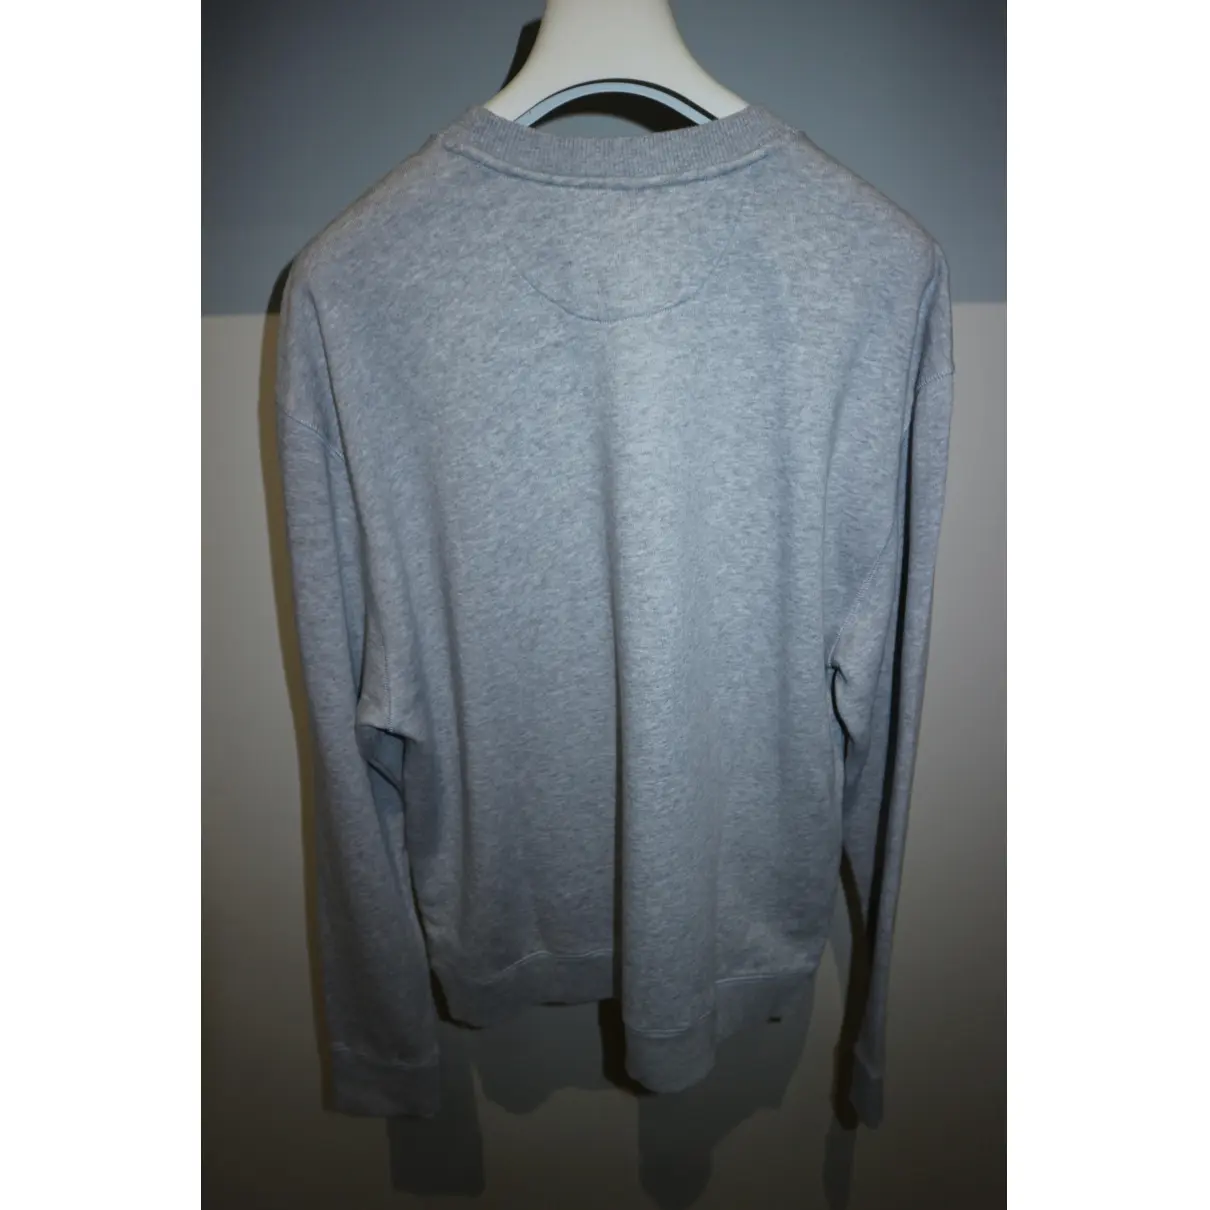 Buy Maison Labiche Grey Cotton Knitwear & Sweatshirt online